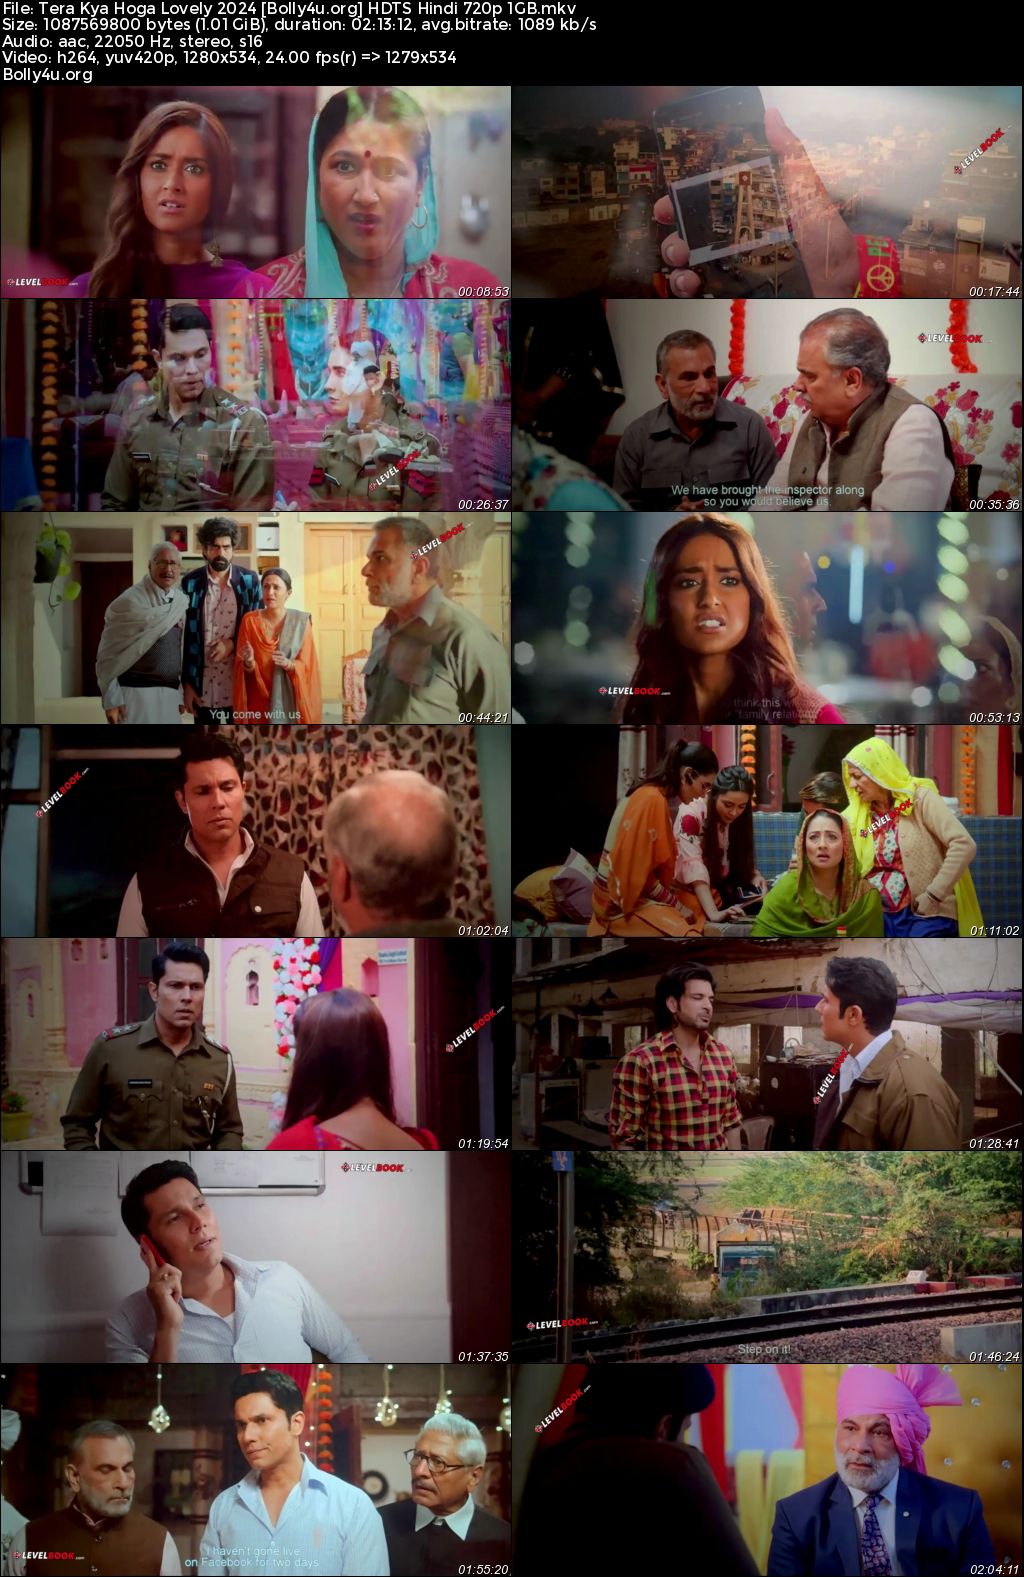 Tera Kya Hoga Lovely 2024 HDTS Hindi Full Movie Download 1080p 720p 480p